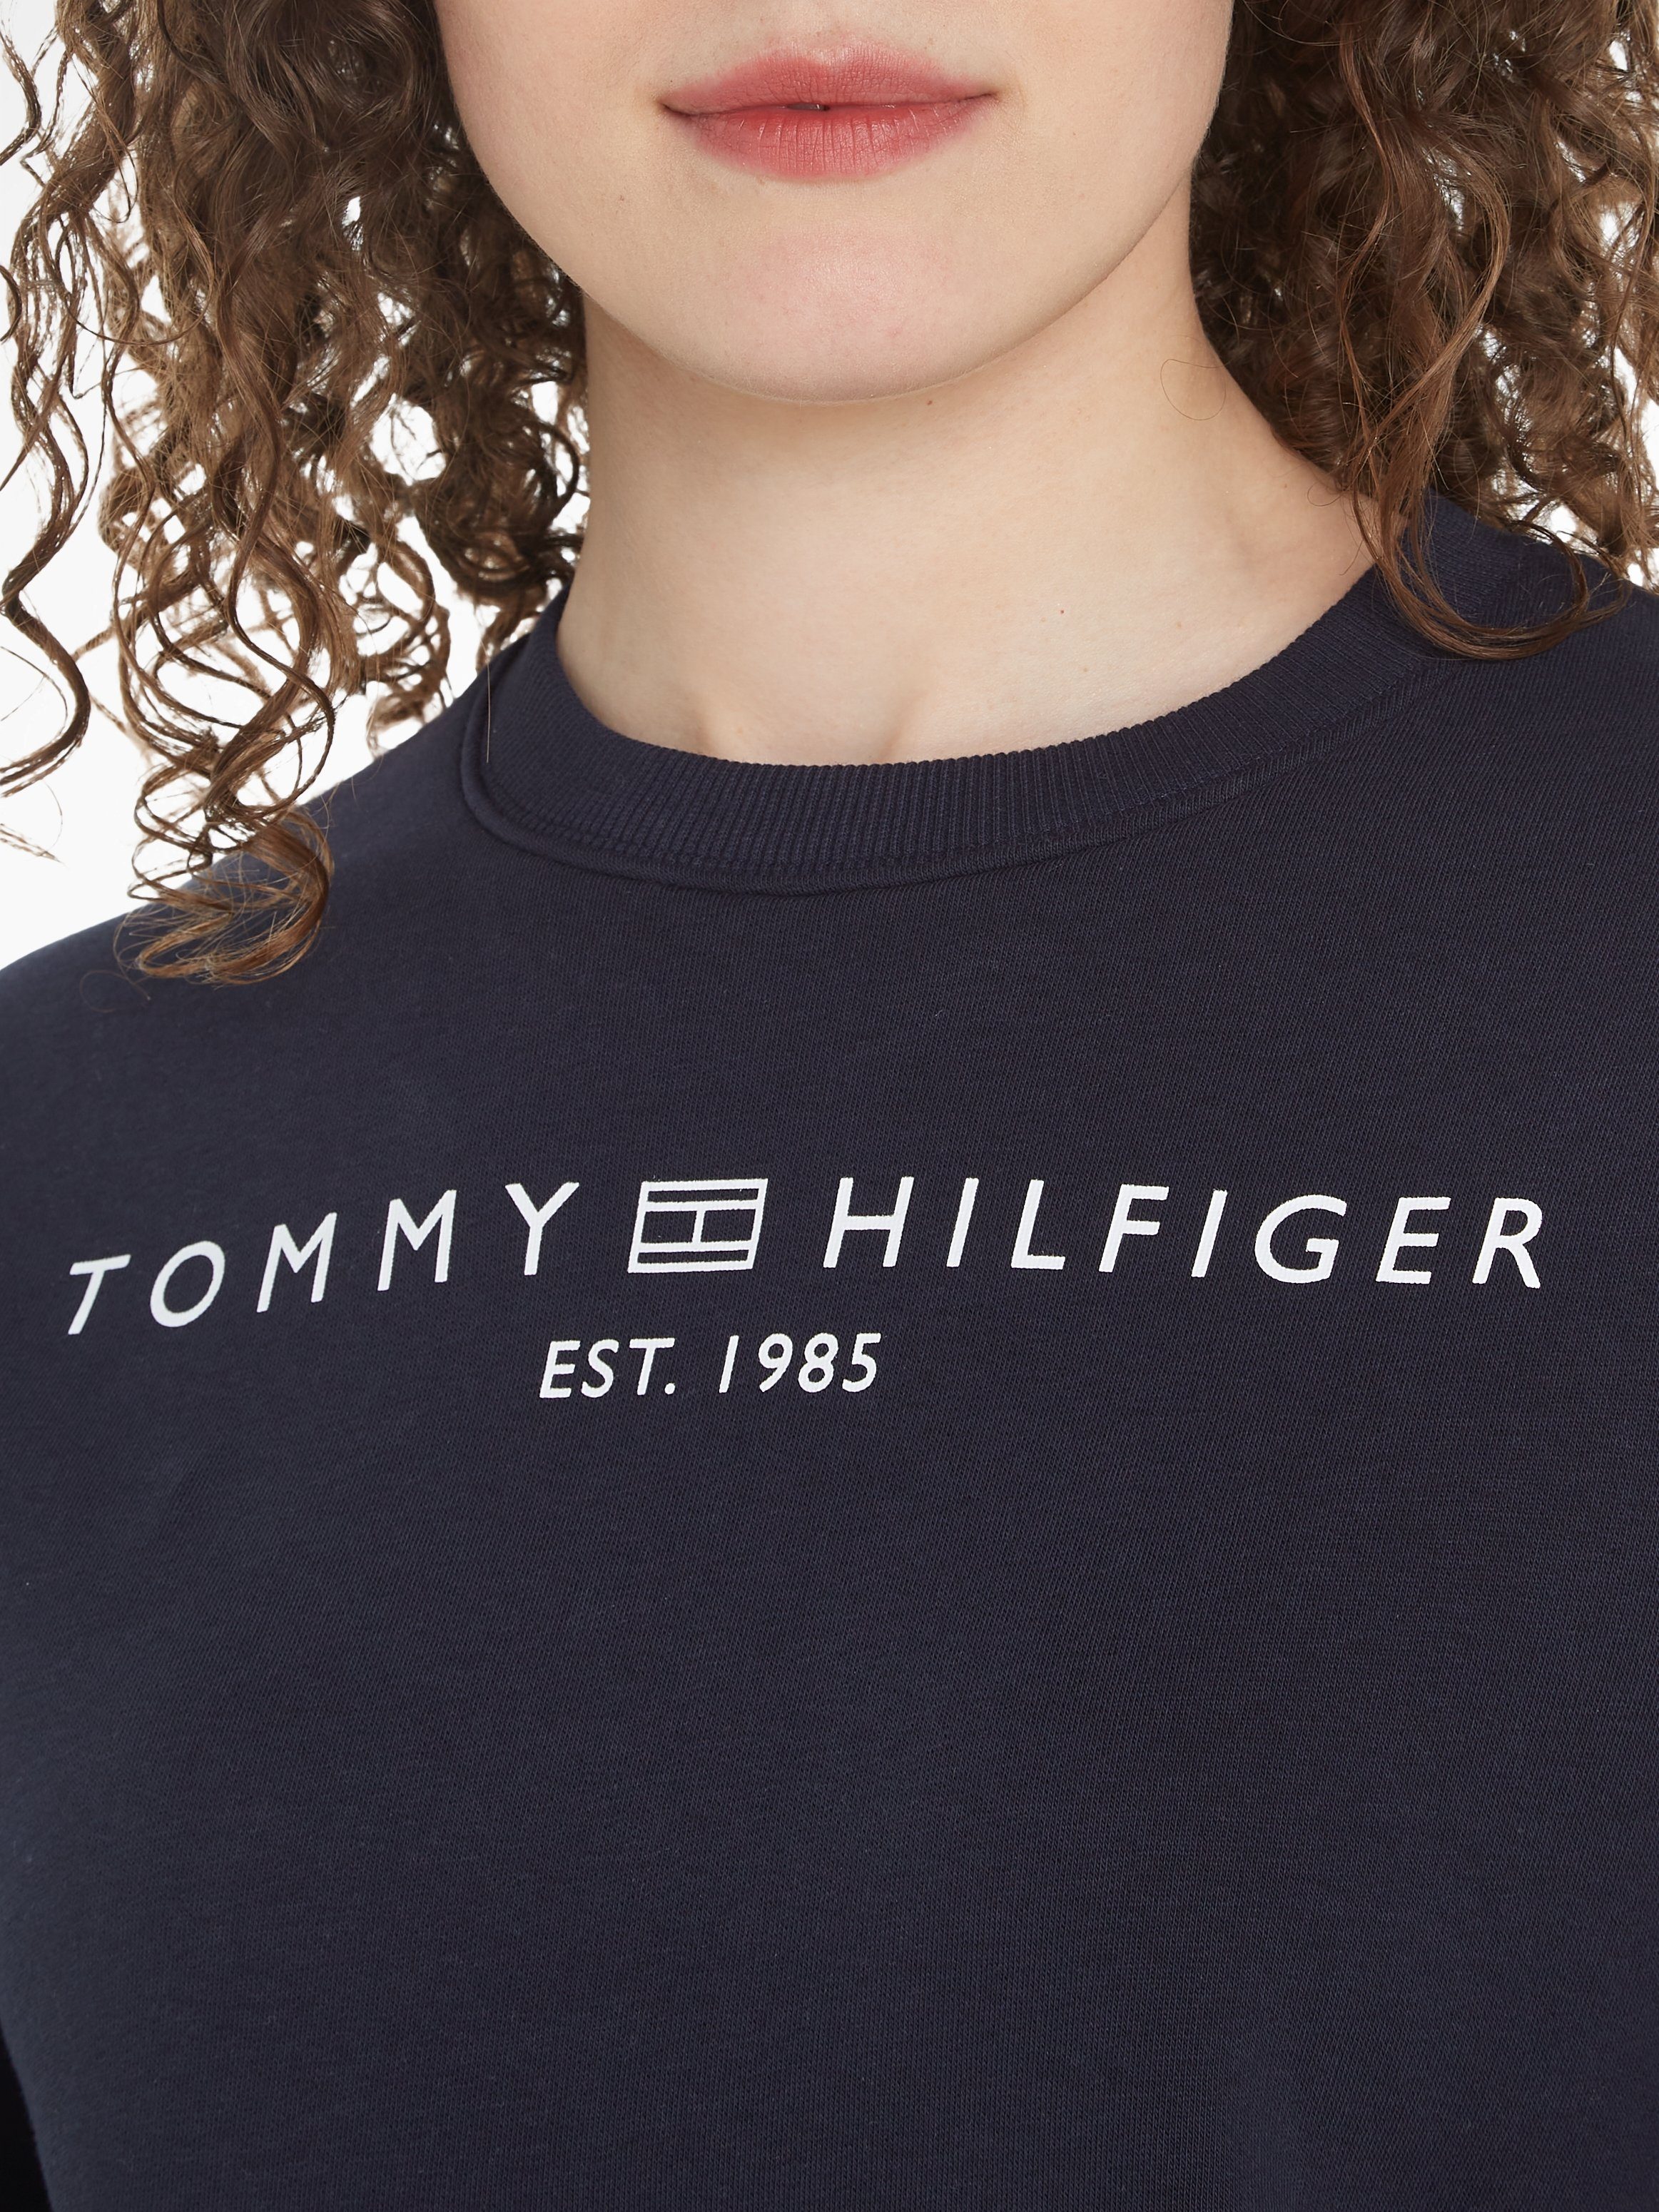 Tommy Hilfiger REG Sky Logoschriftzug SWTSHRT mit CORP LOGO Sweatshirt Desert MDRN C-NK